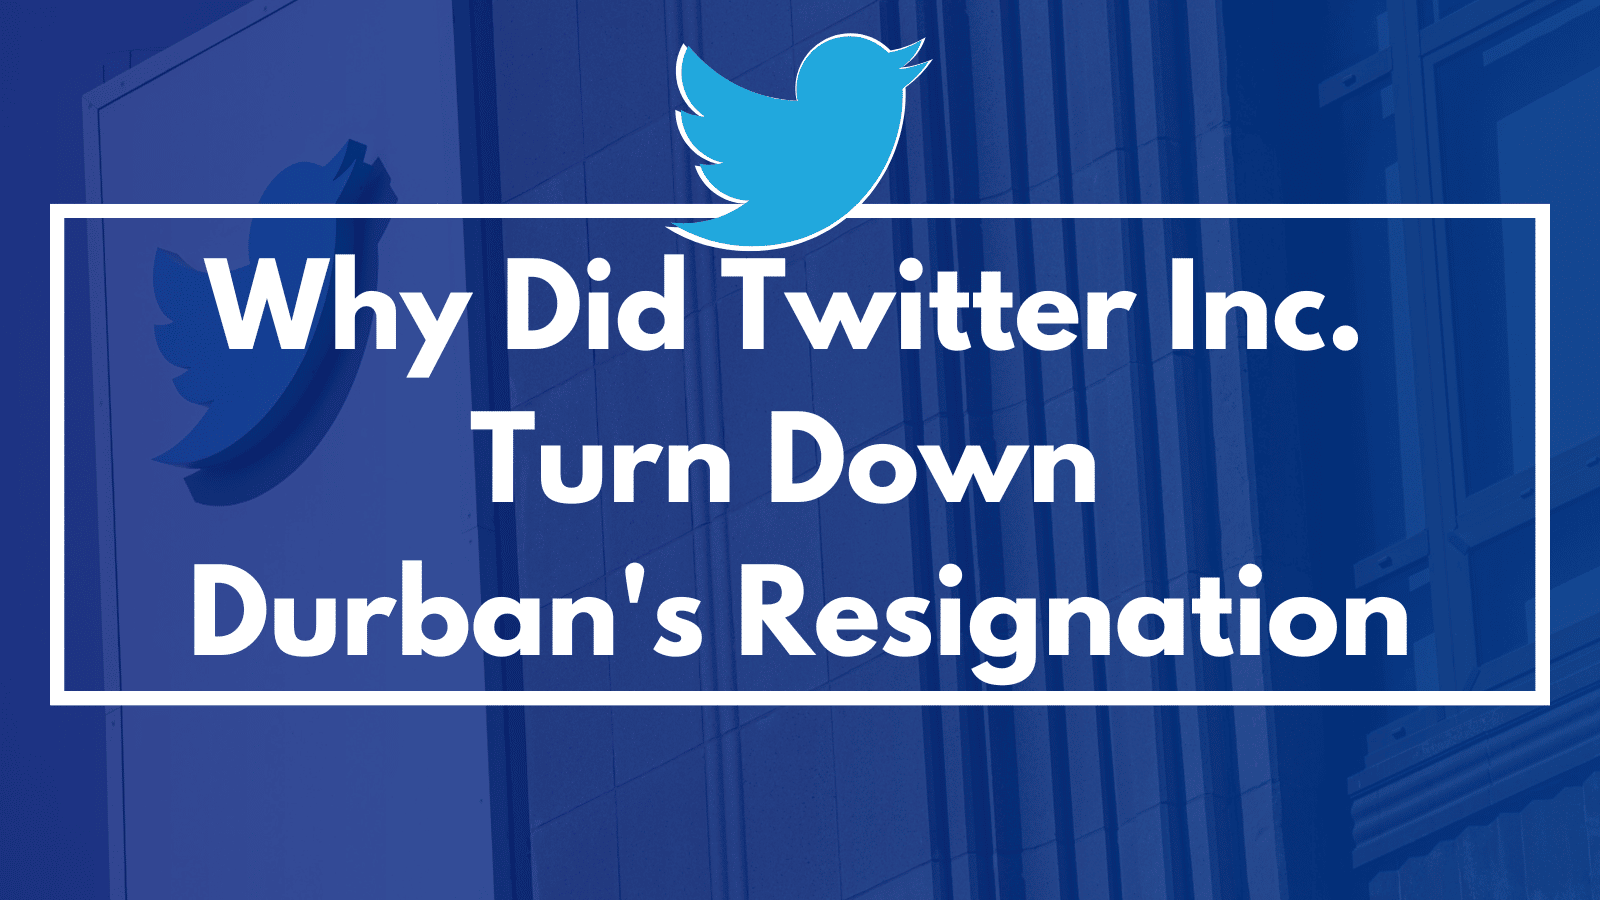 Why Did Twitter Inc. Turn Down Durban's Resignation?